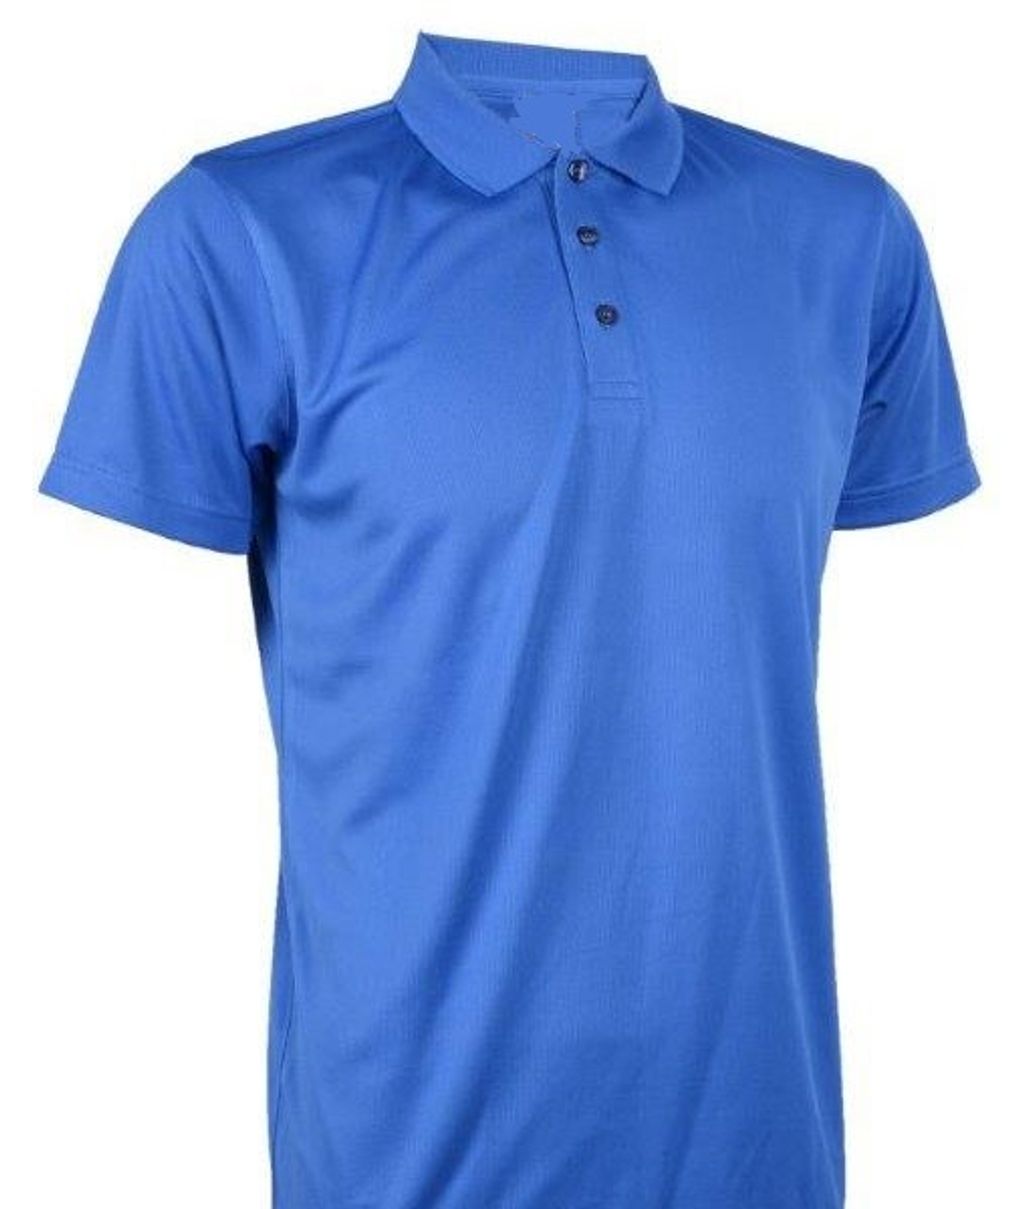 Outrefit Microfiber Collar Polo Shirt Royal Blue.jpg